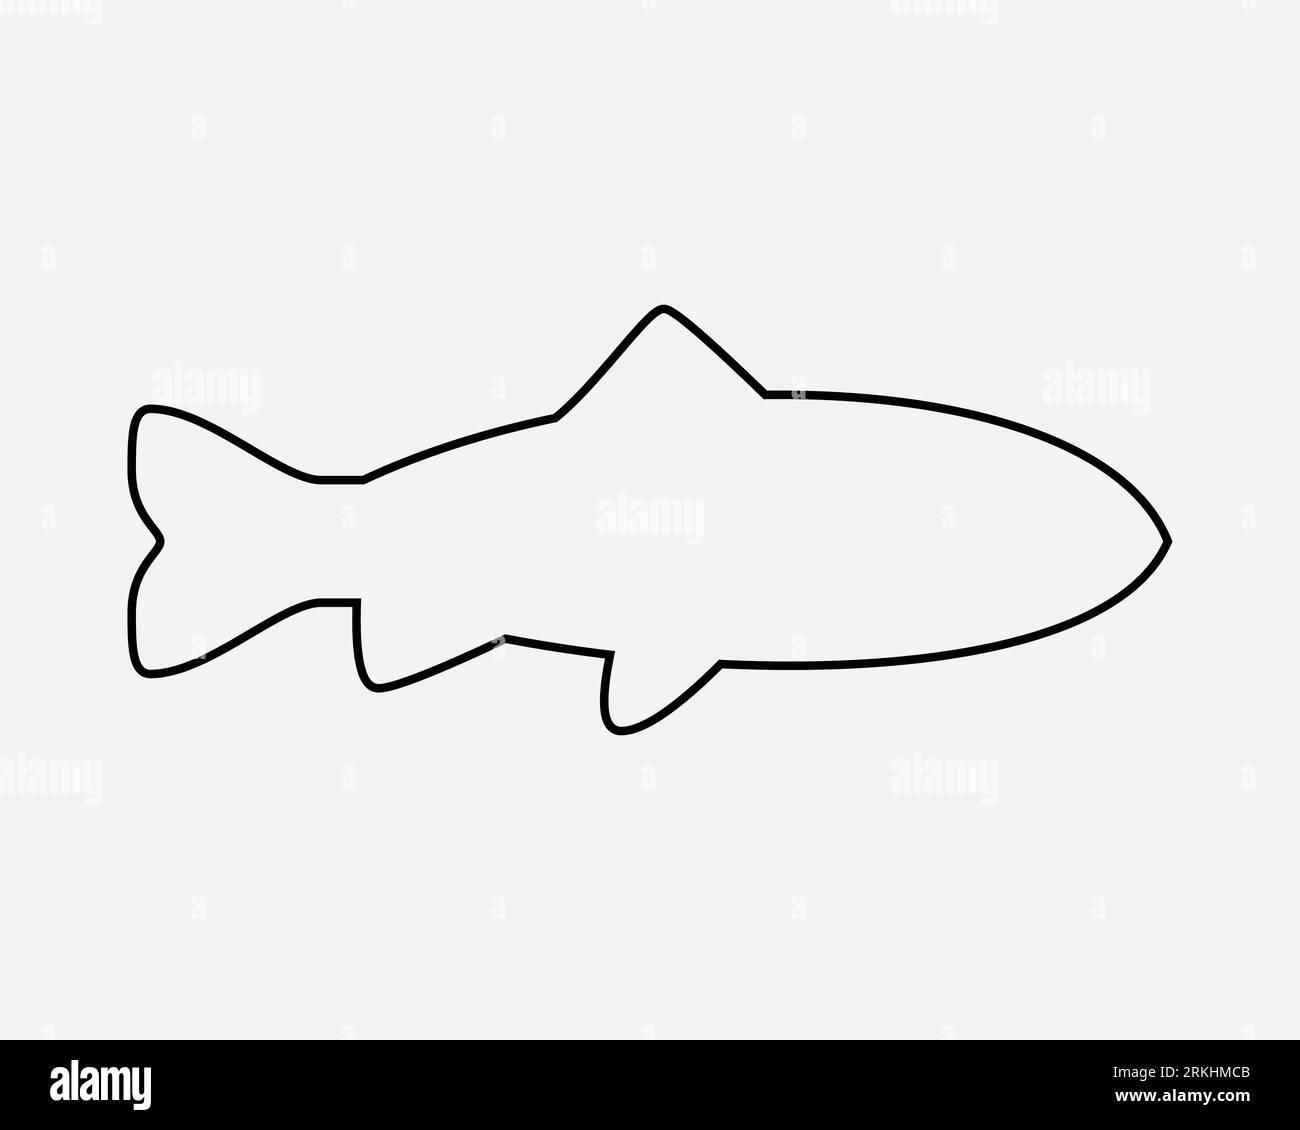 https://c8.alamy.com/comp/2RKHMCB/fish-outline-icon-ocean-sea-seafood-marine-wildlife-animal-black-white-line-shape-empty-template-blank-vector-clipart-illustration-artwork-sign-symbol-2RKHMCB.jpg